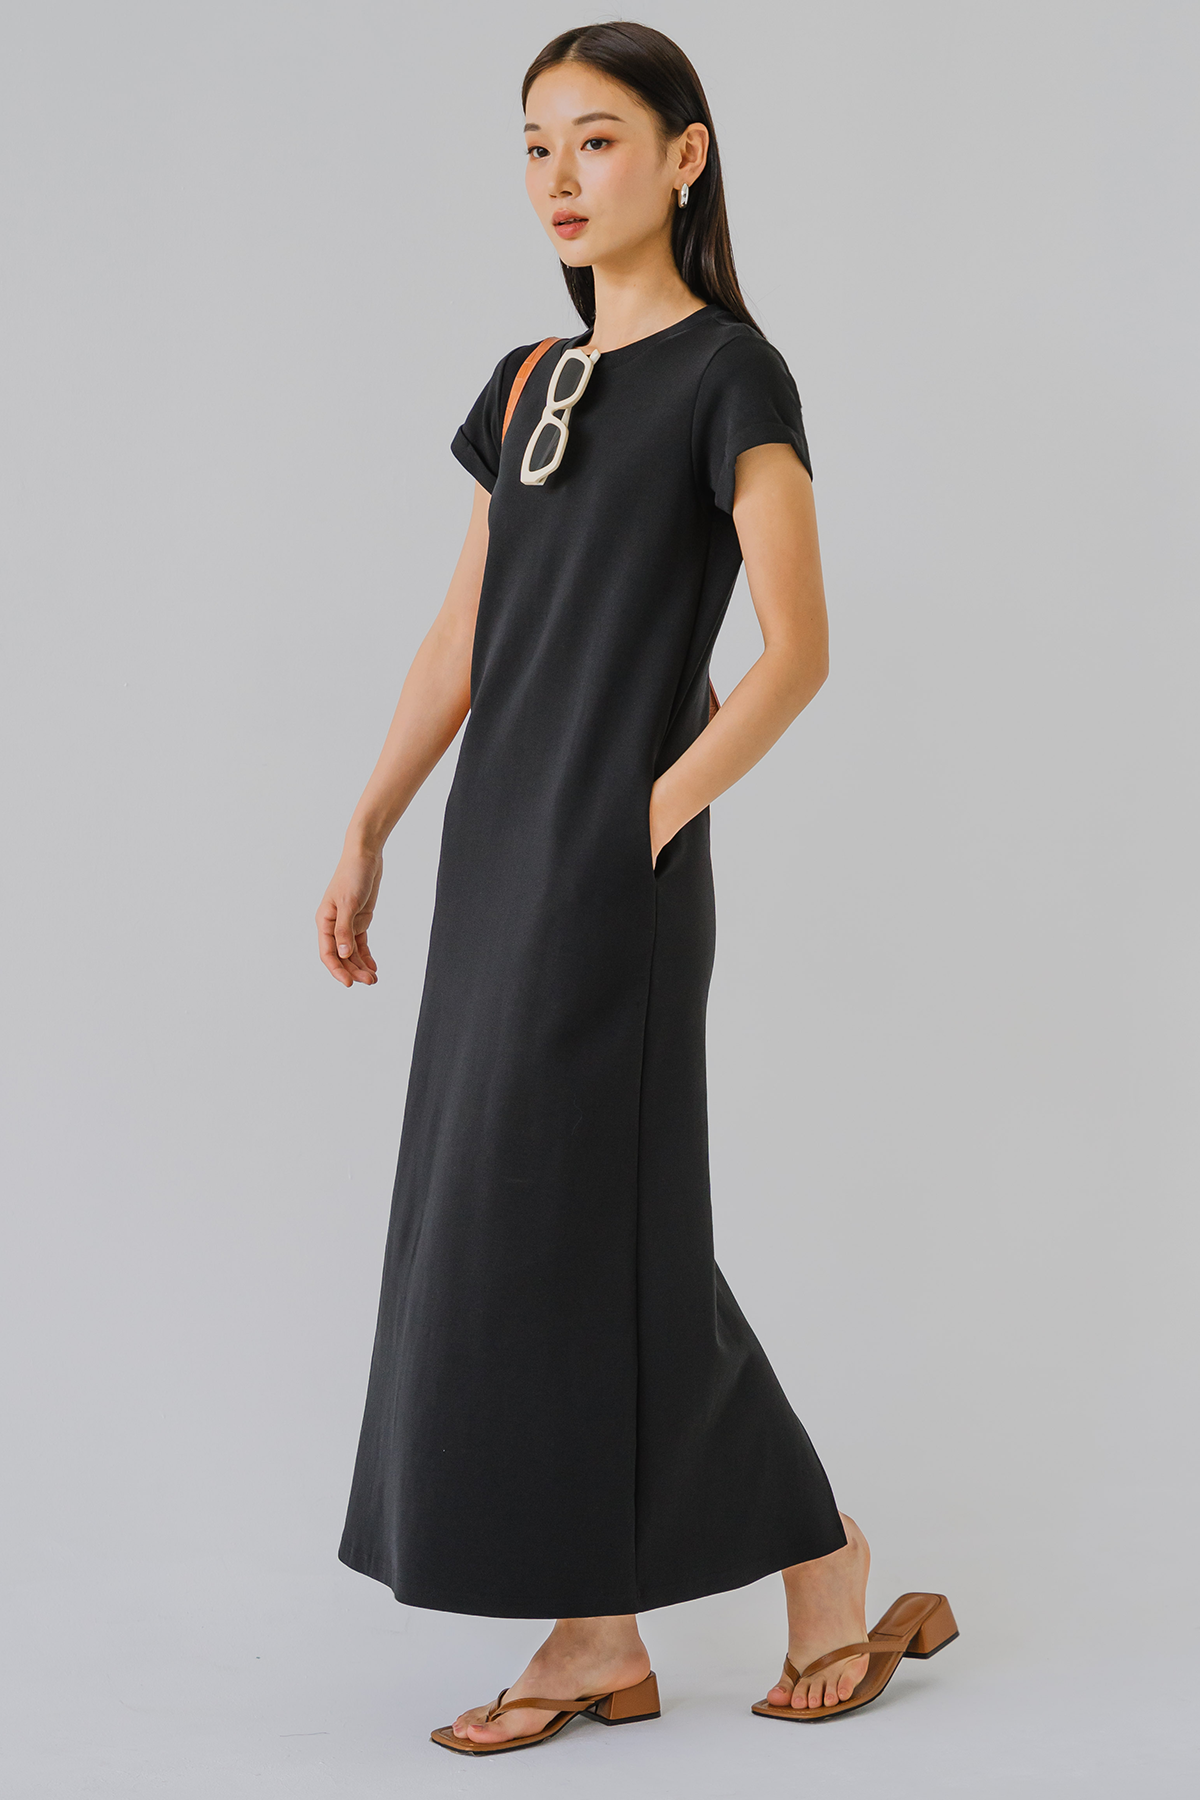 For Keeps Round Neck Midi Dress (Black)